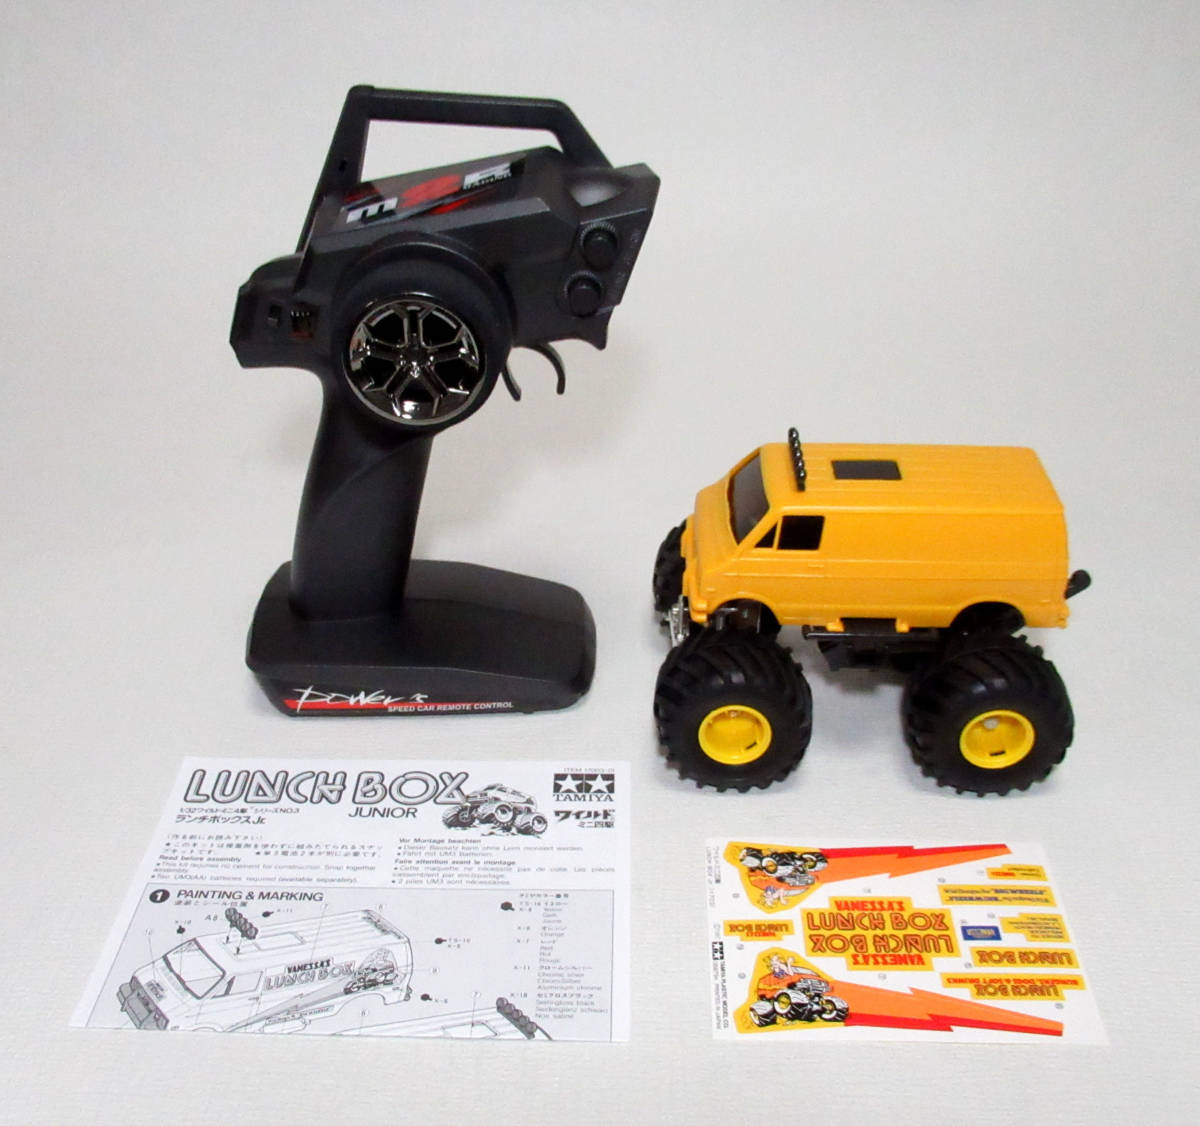  Tamiya ланч box Jr. радиоконтроллер wild Mini 4WD модифицировано товар RCui Lee движение возможно талант * аккумулятор + с зарядным устройством 